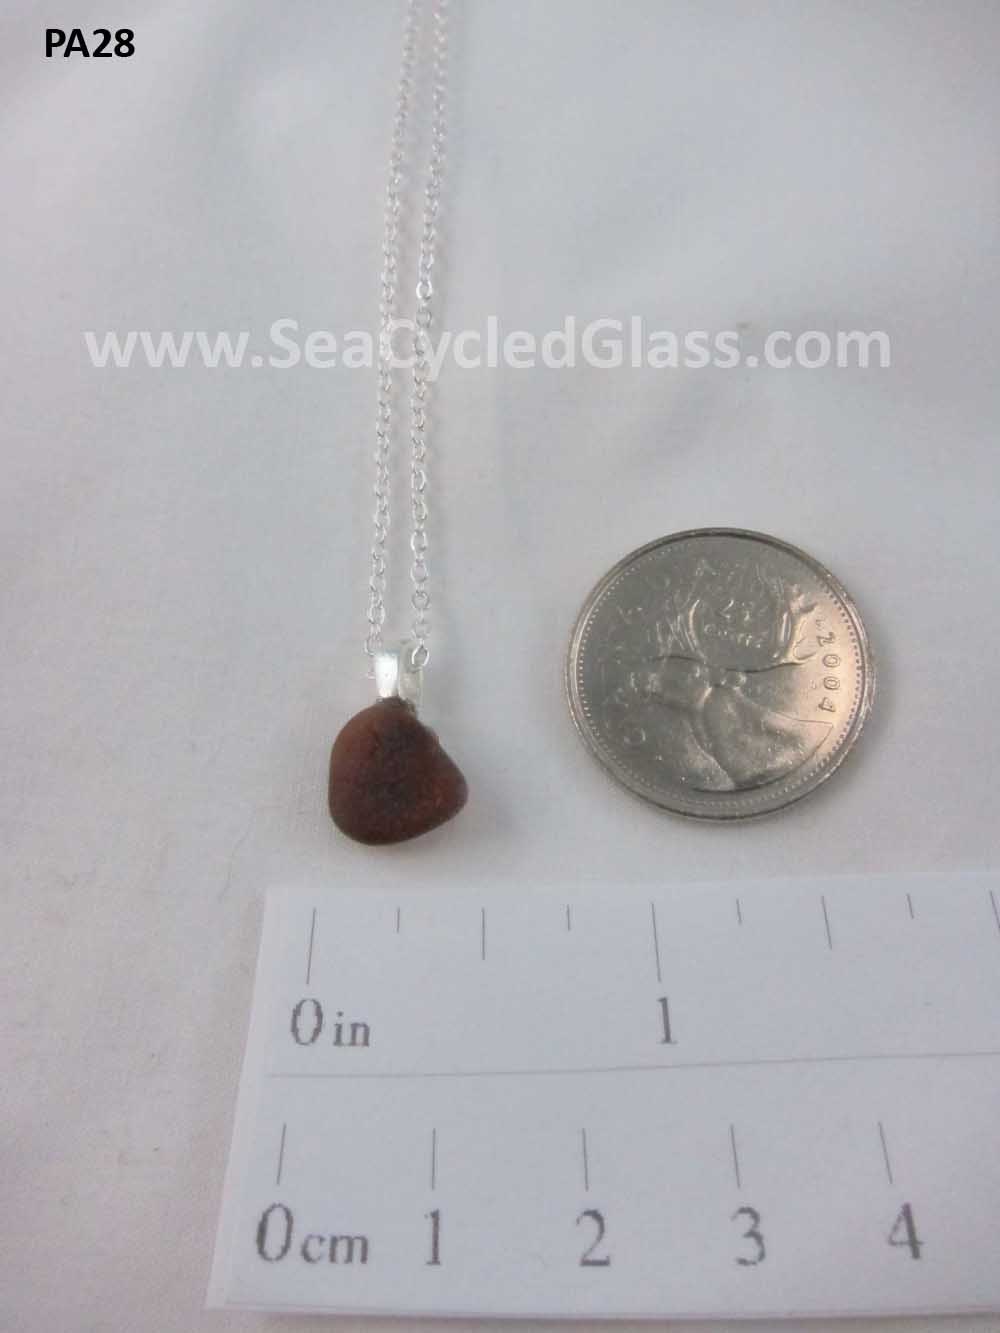 Cape Breton, Nova Scotia amber sea glass pendant with silverplate bail and 18" chain (PA28)